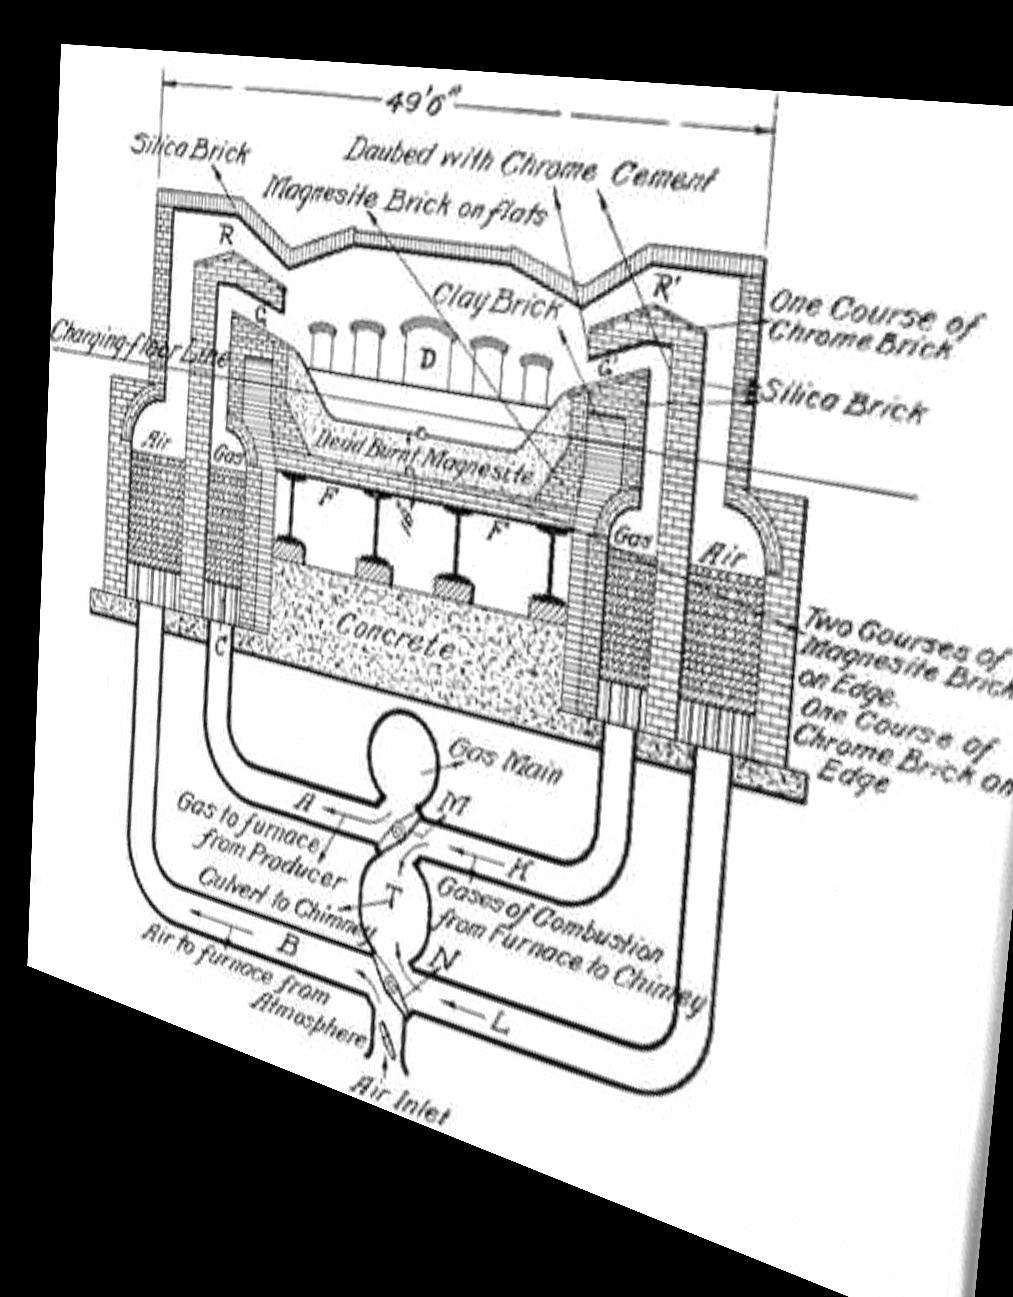 Siemens Martin process Open hearth furnace Siemens ova regenerativna peć, 1850 ih koristi opeku i otpadne gasove